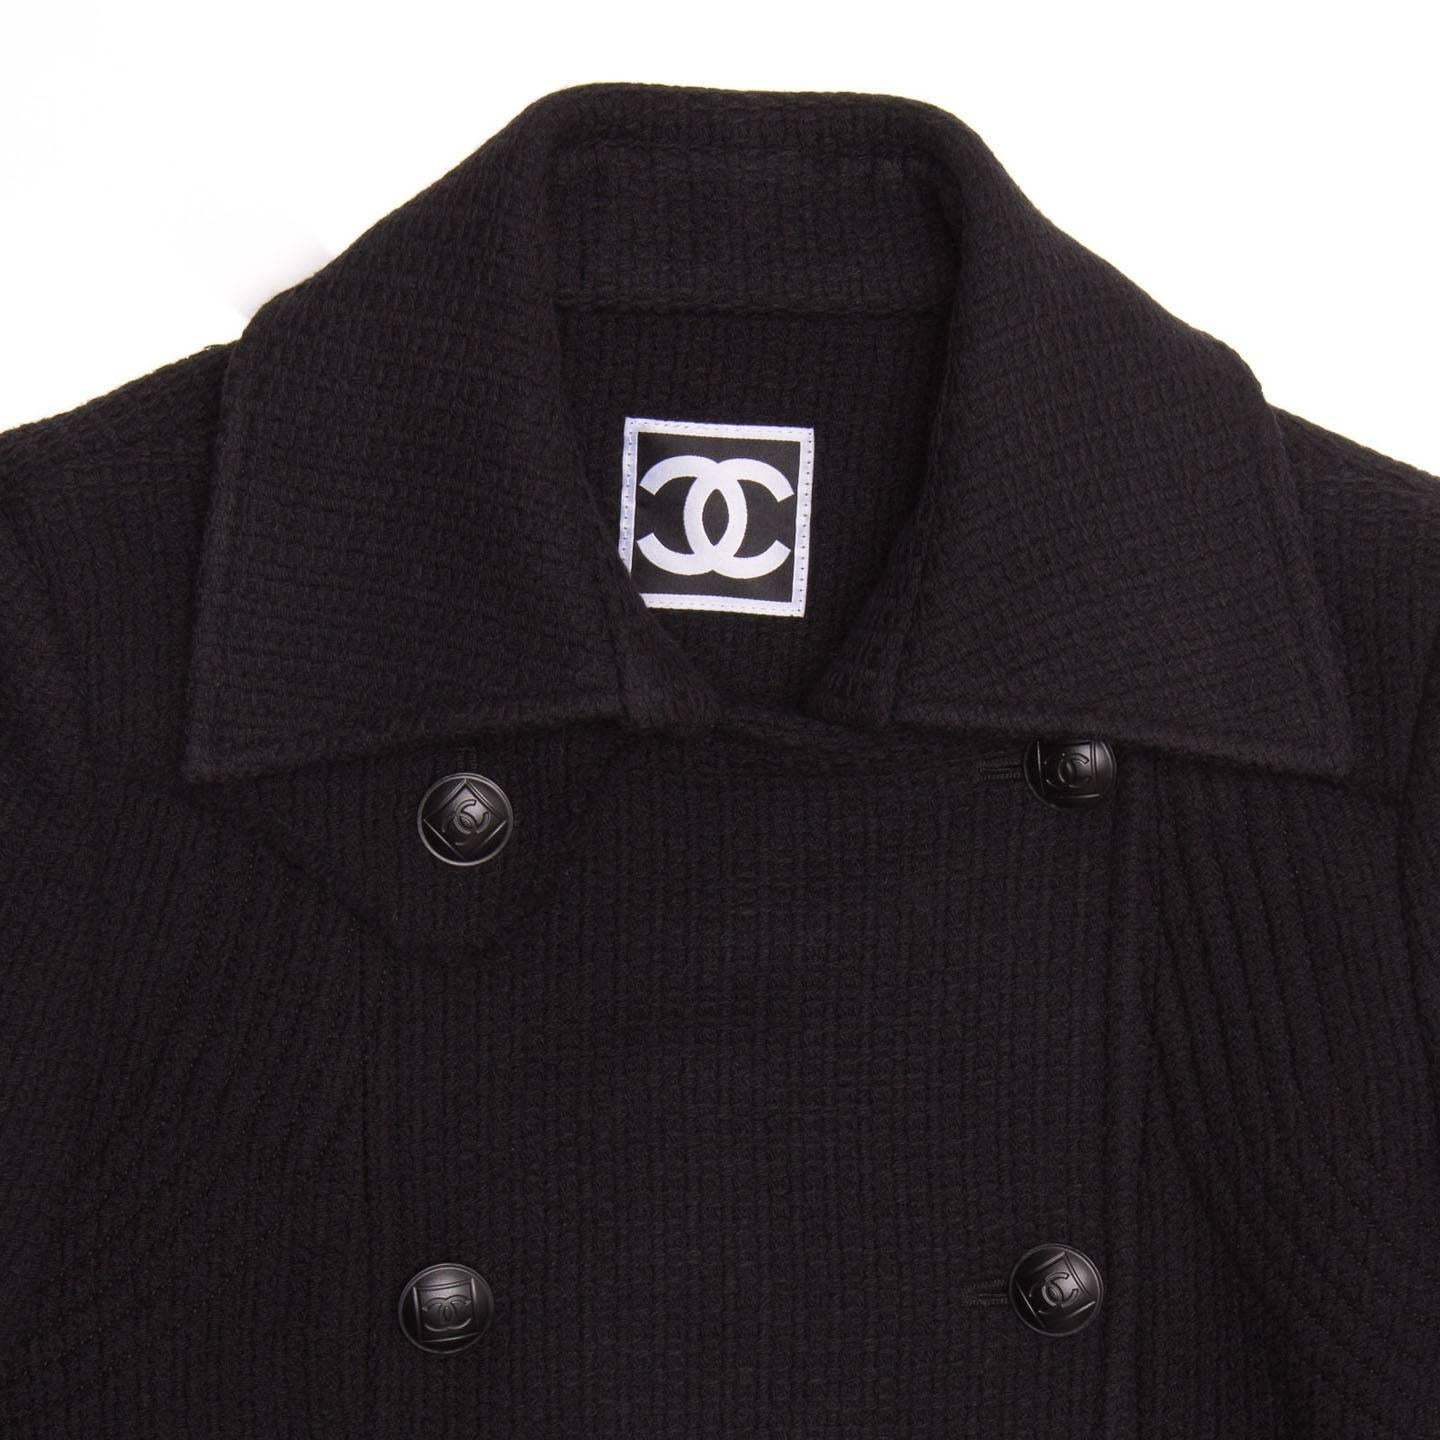 Chanel Black Wool Peacoat Jacket 1